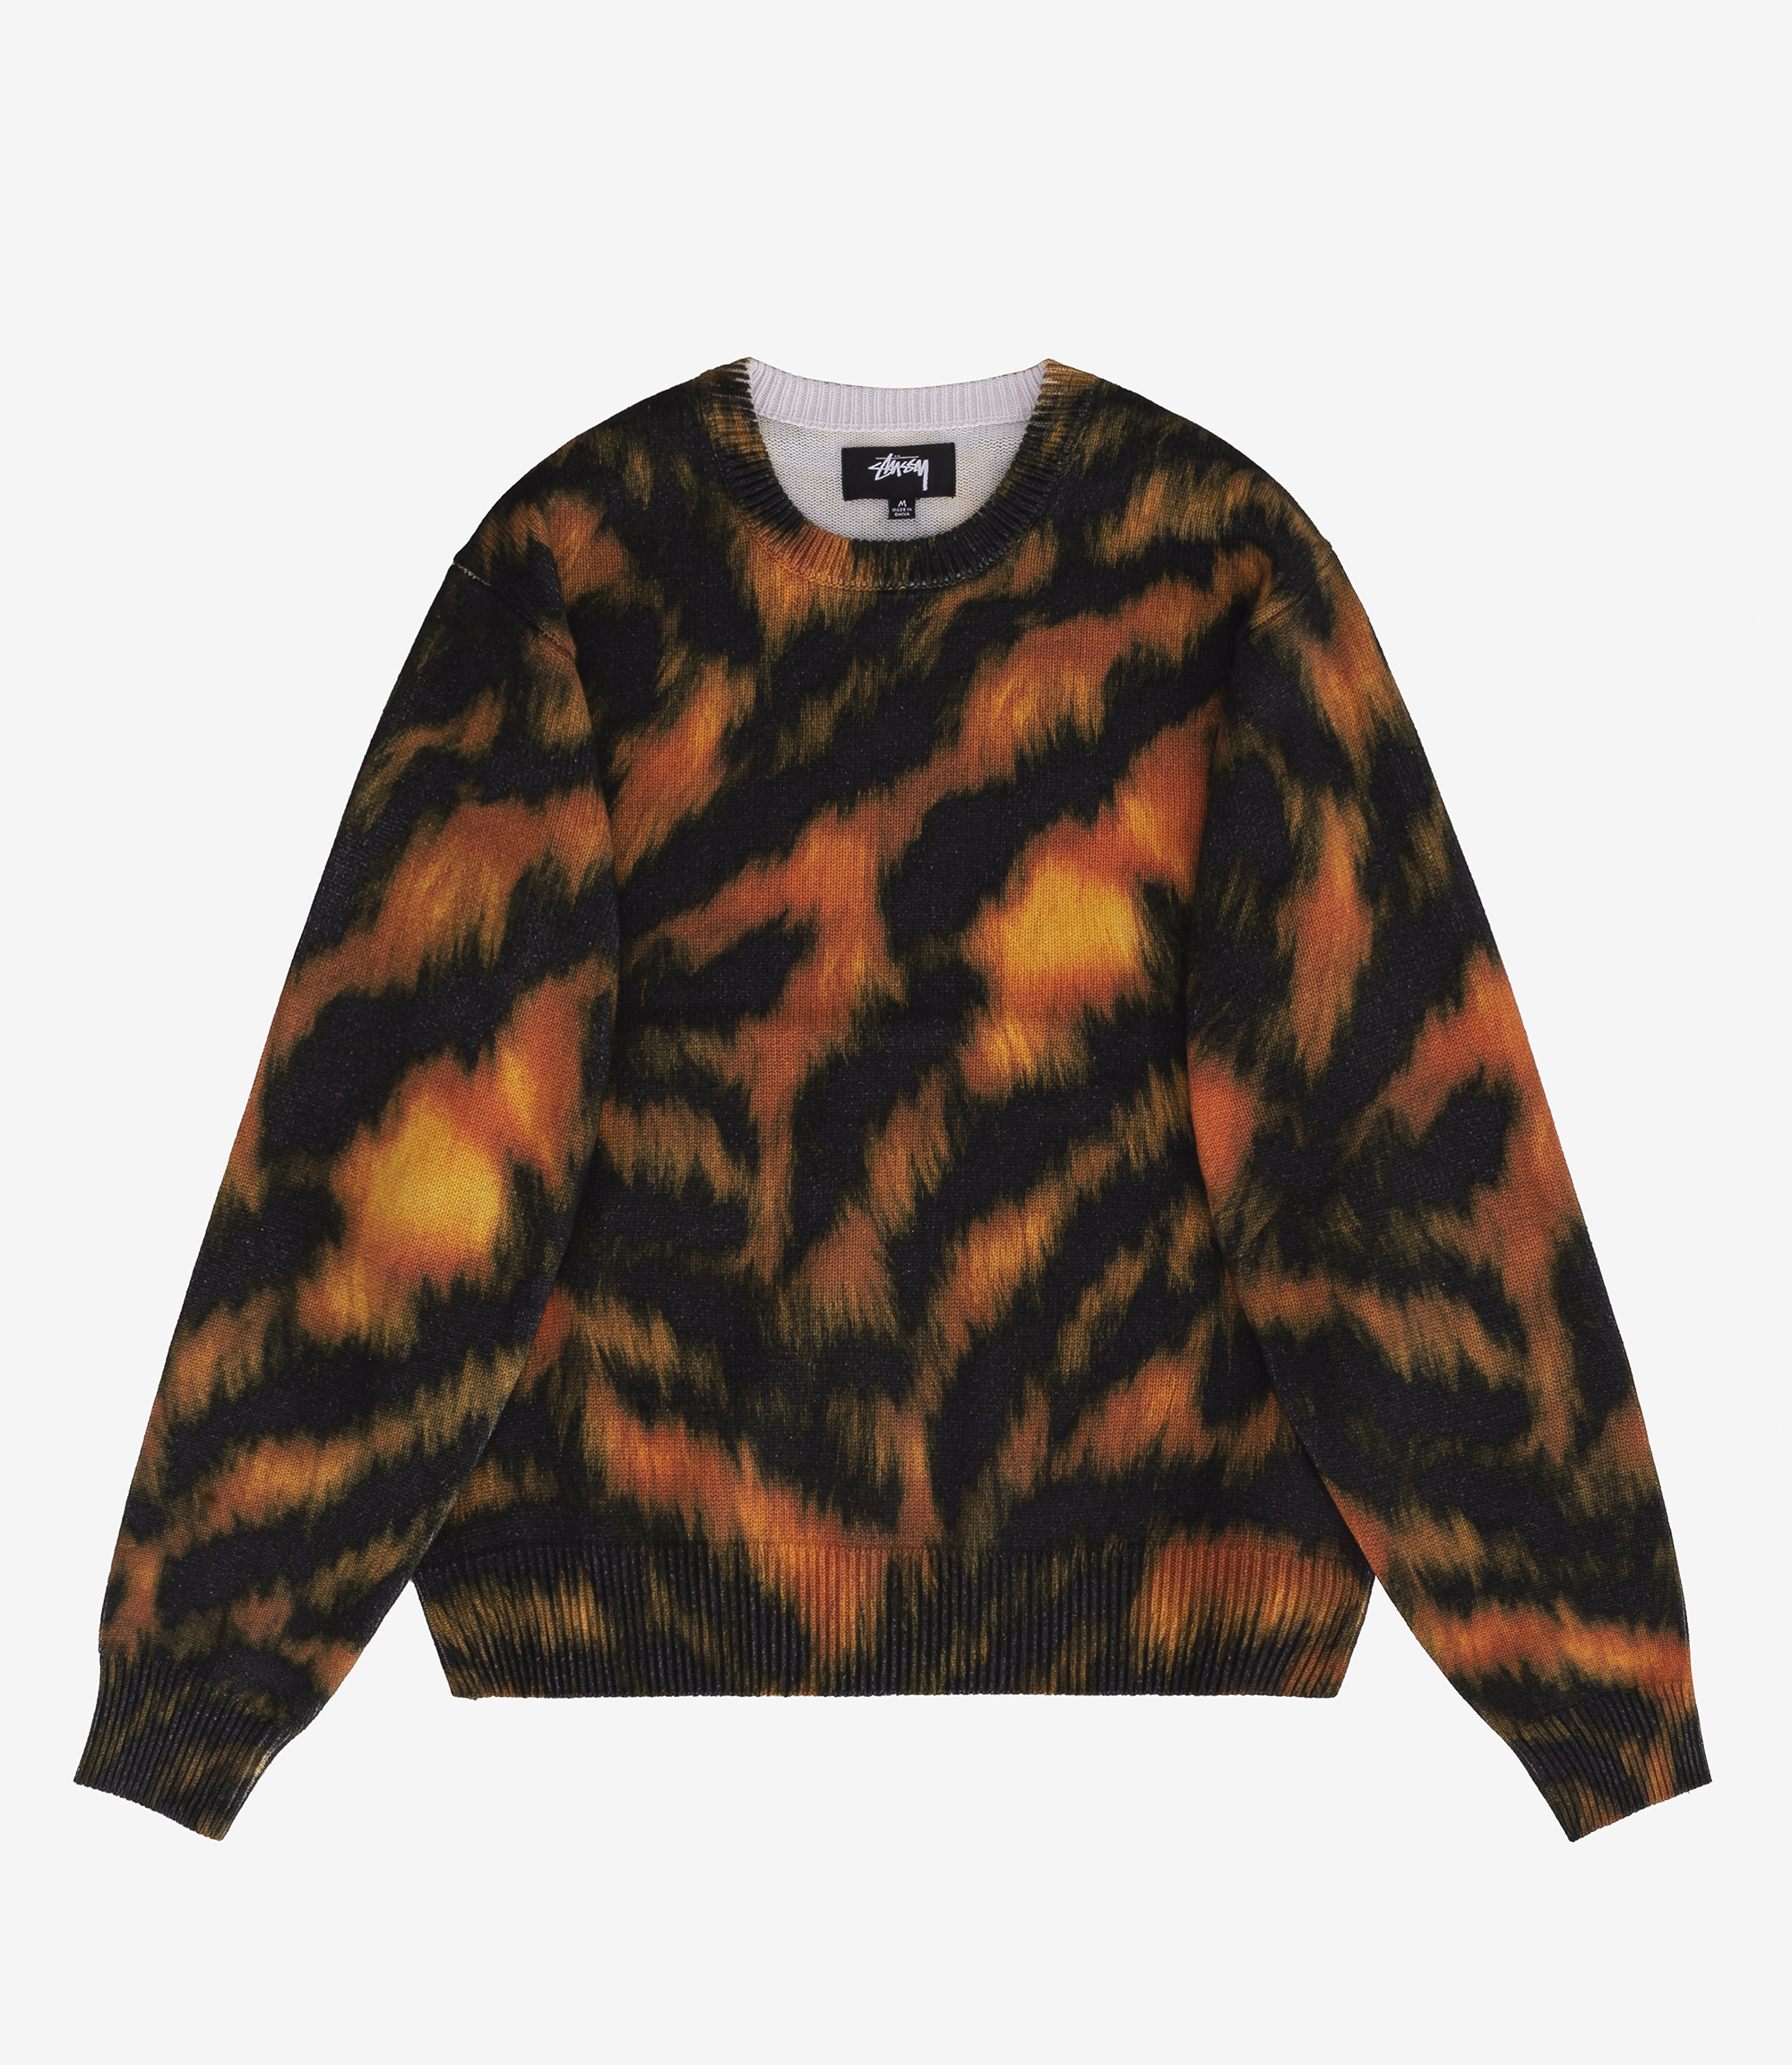 Shop Stussy Printed Fur Sweater Tiger at itk online store